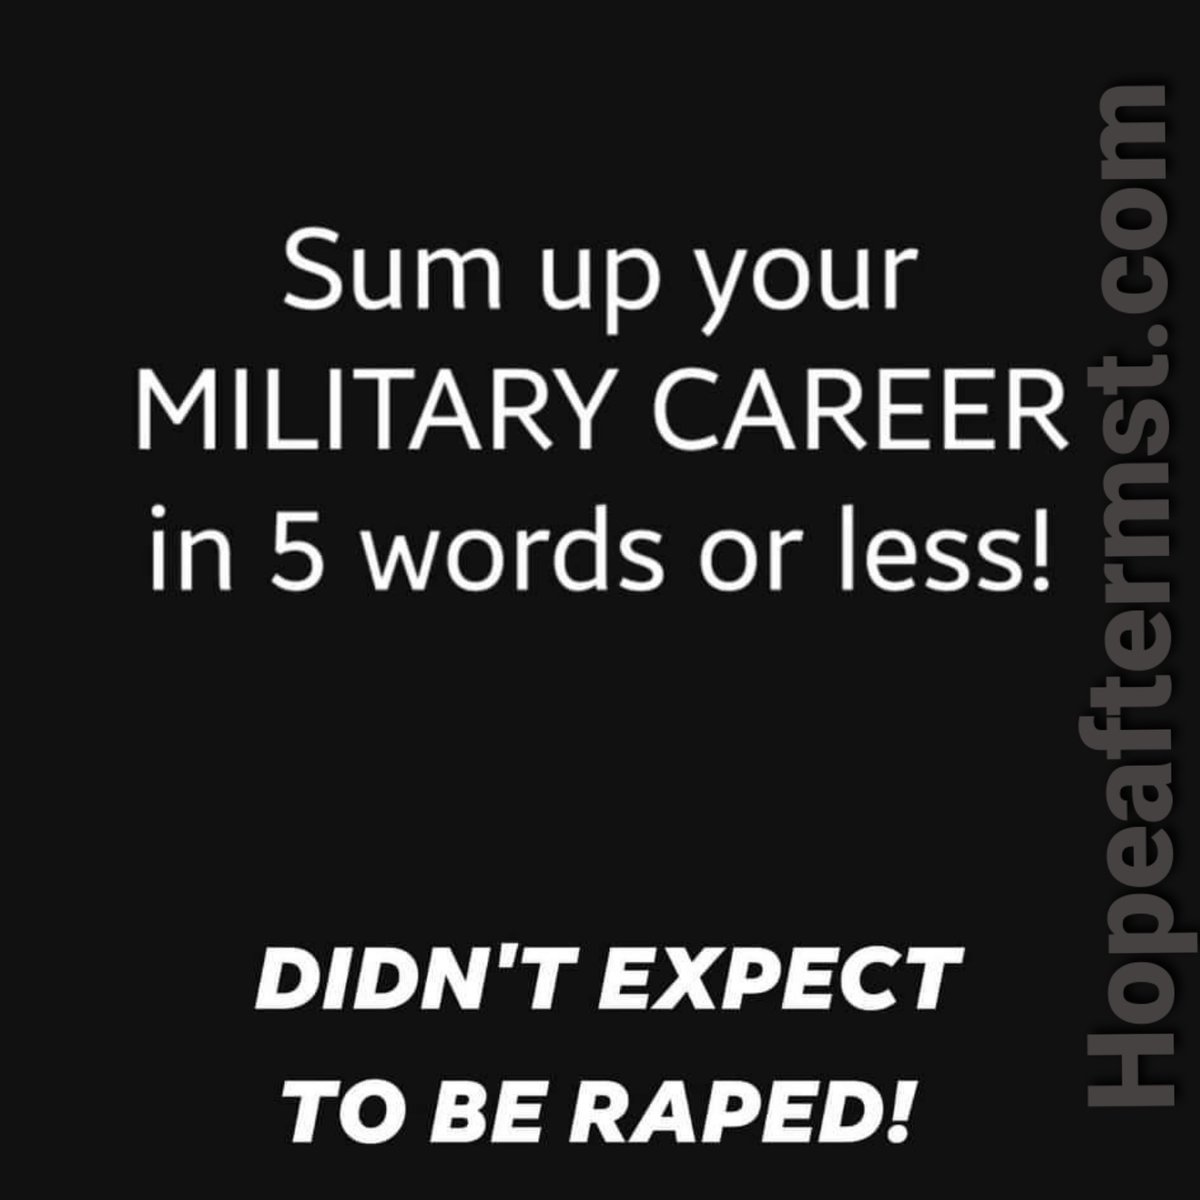 @alyssa_schoener help me fight military Sexual trauma retweet this it's free. 
Hopeaftermst.com
#speaktoasurvivor #stopmilitarysexualtrauma